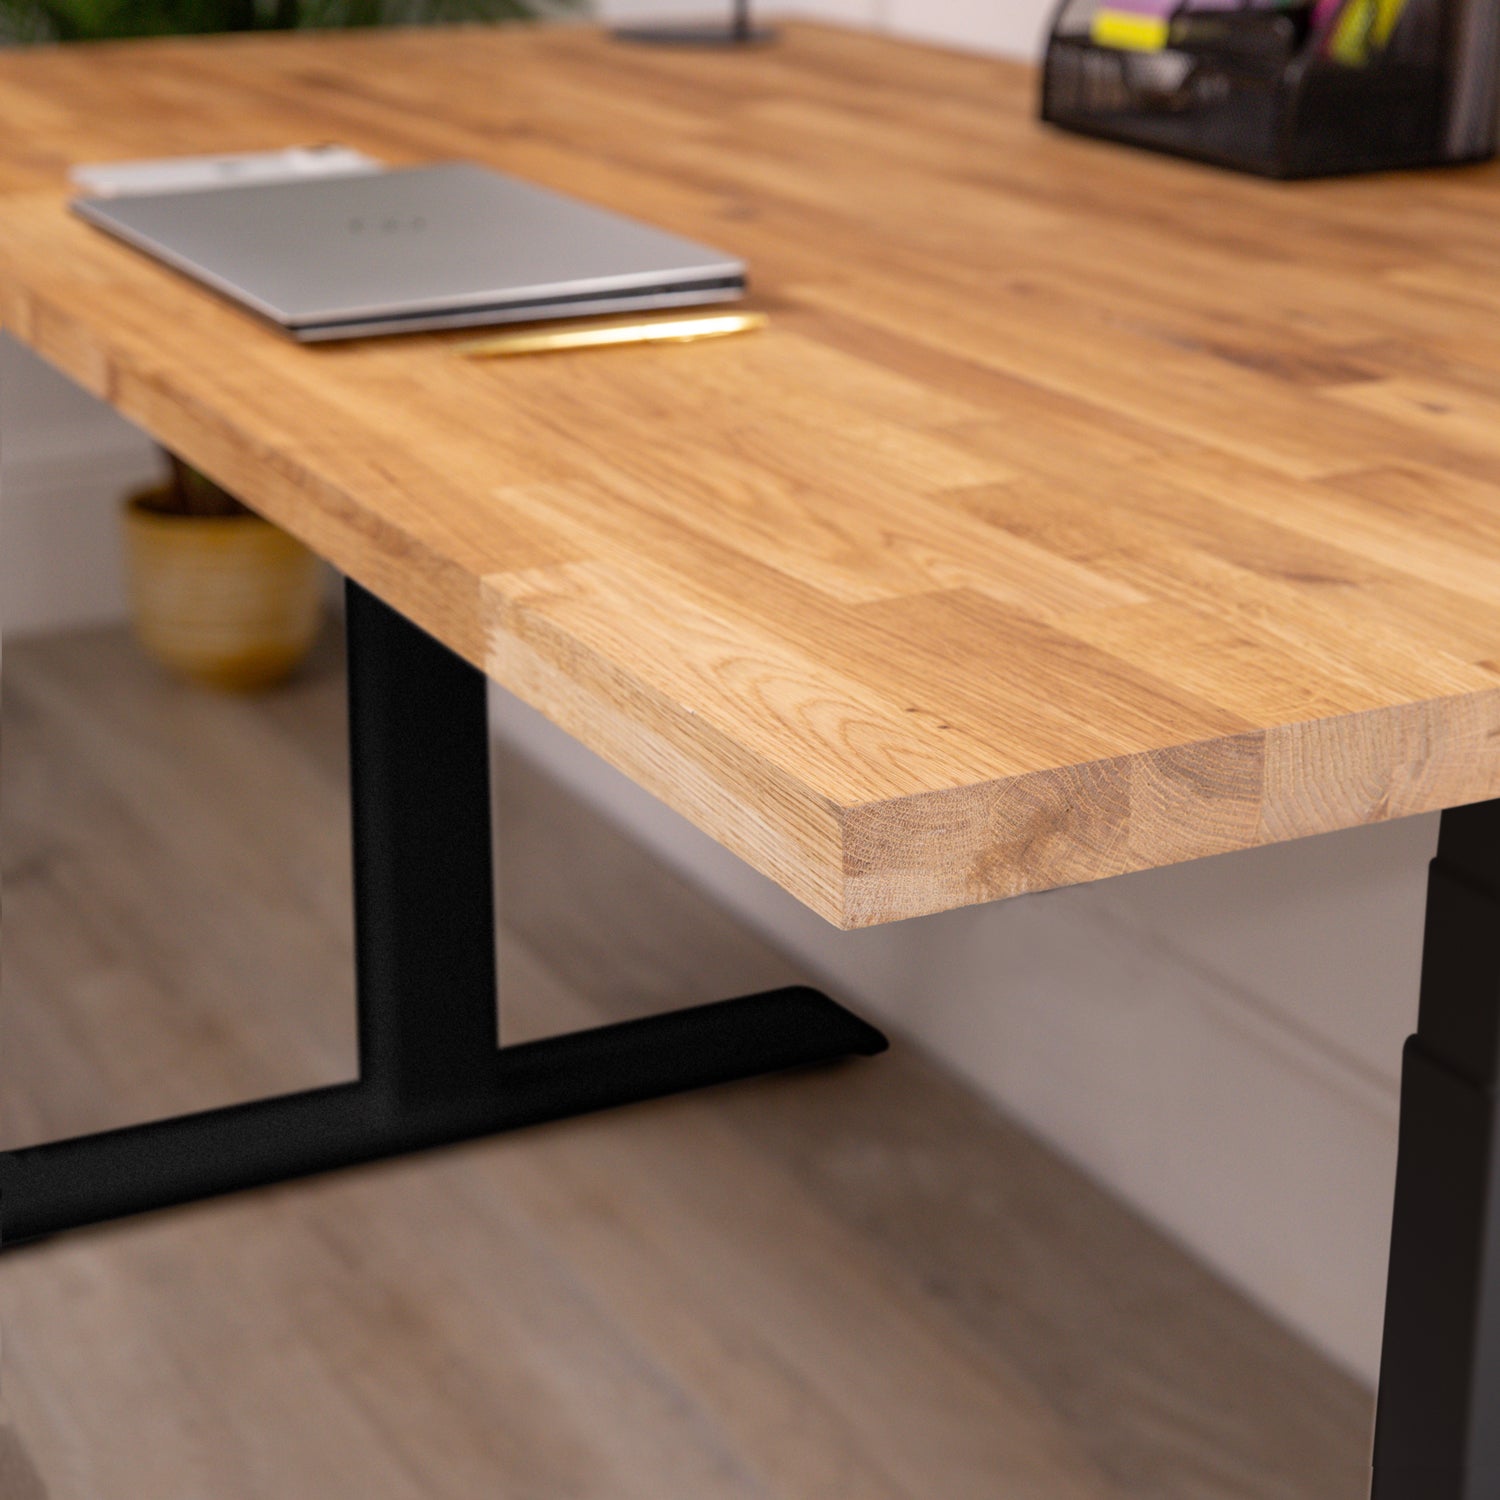 Premium Black Sit Stand Electric Desk with Oak Wooden Desktop